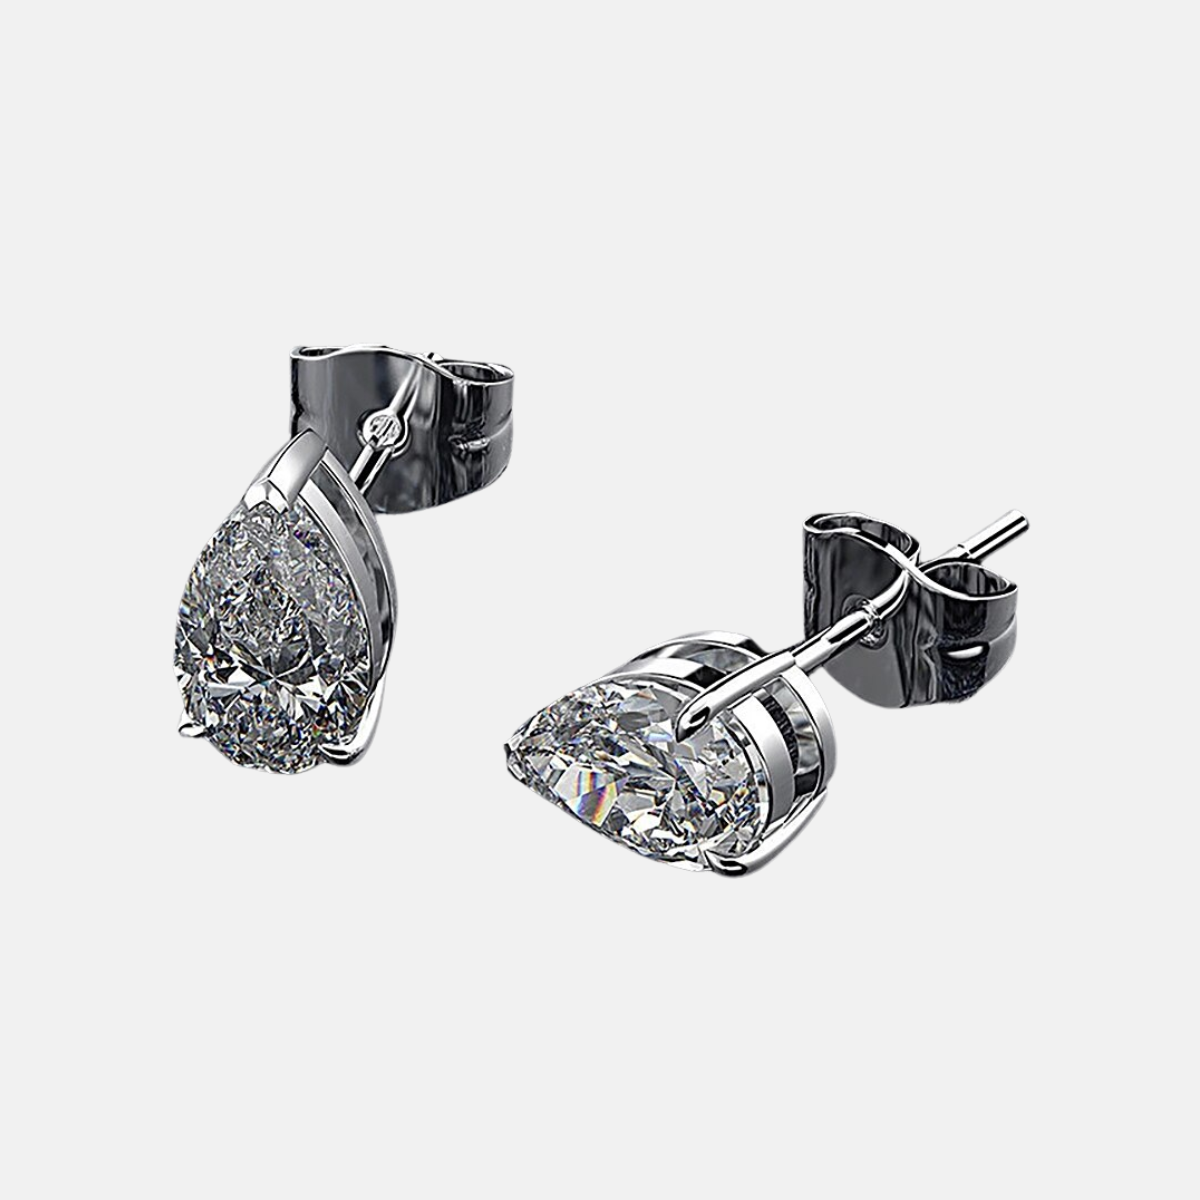 2CT Pear Moissanite Diamond Earrings S925 Sterling Silver